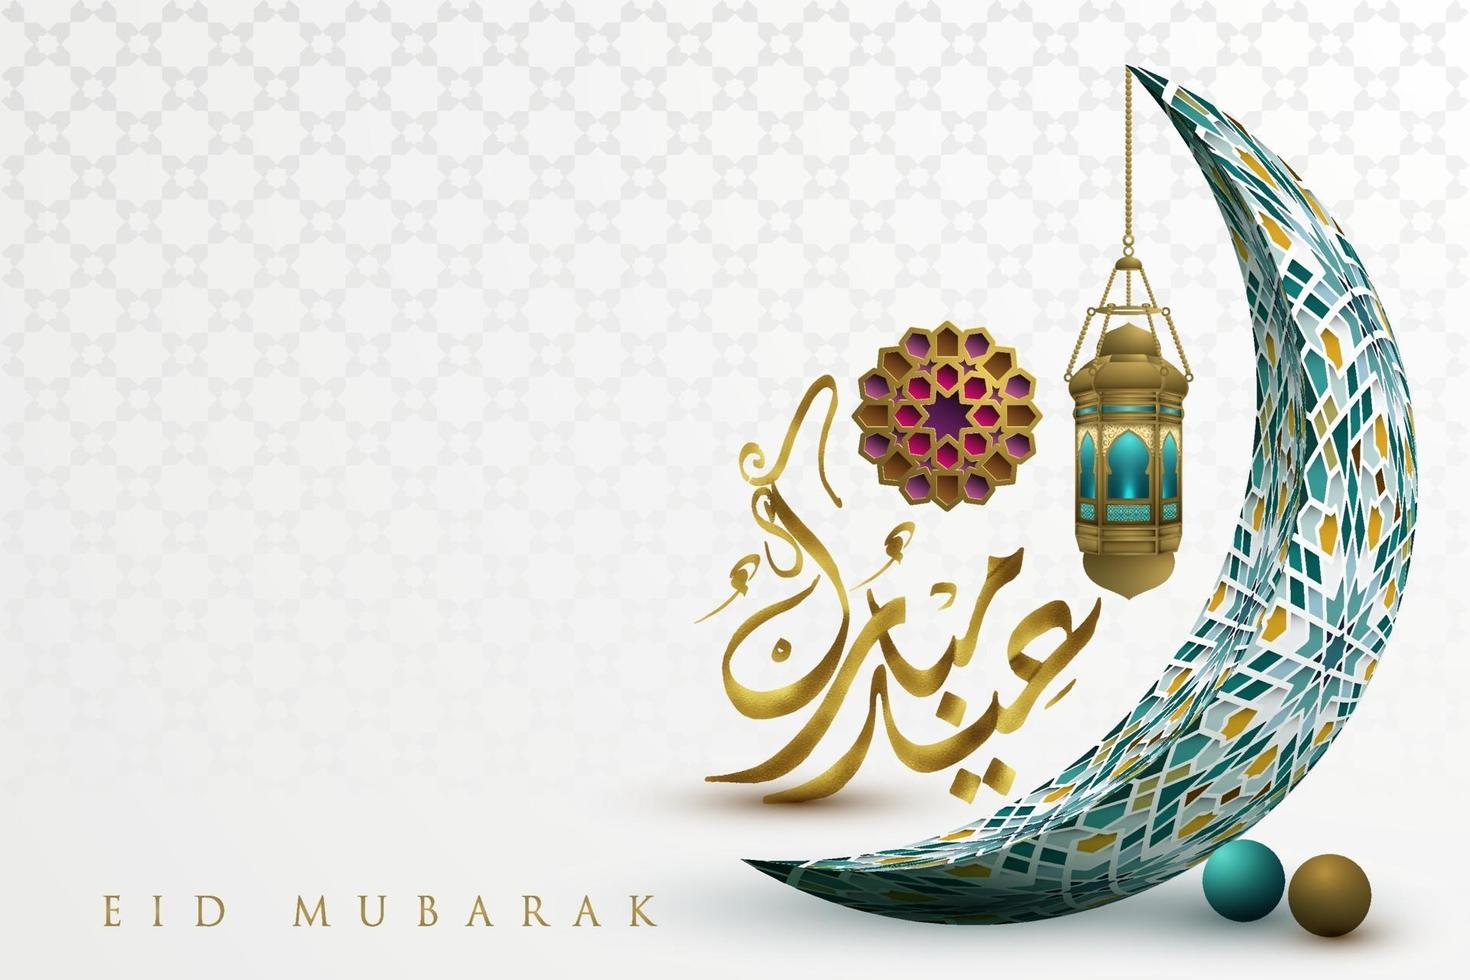 eid mubarak greeting card islamic illustration background design with beautiful moon and arabic calligraphy free vector